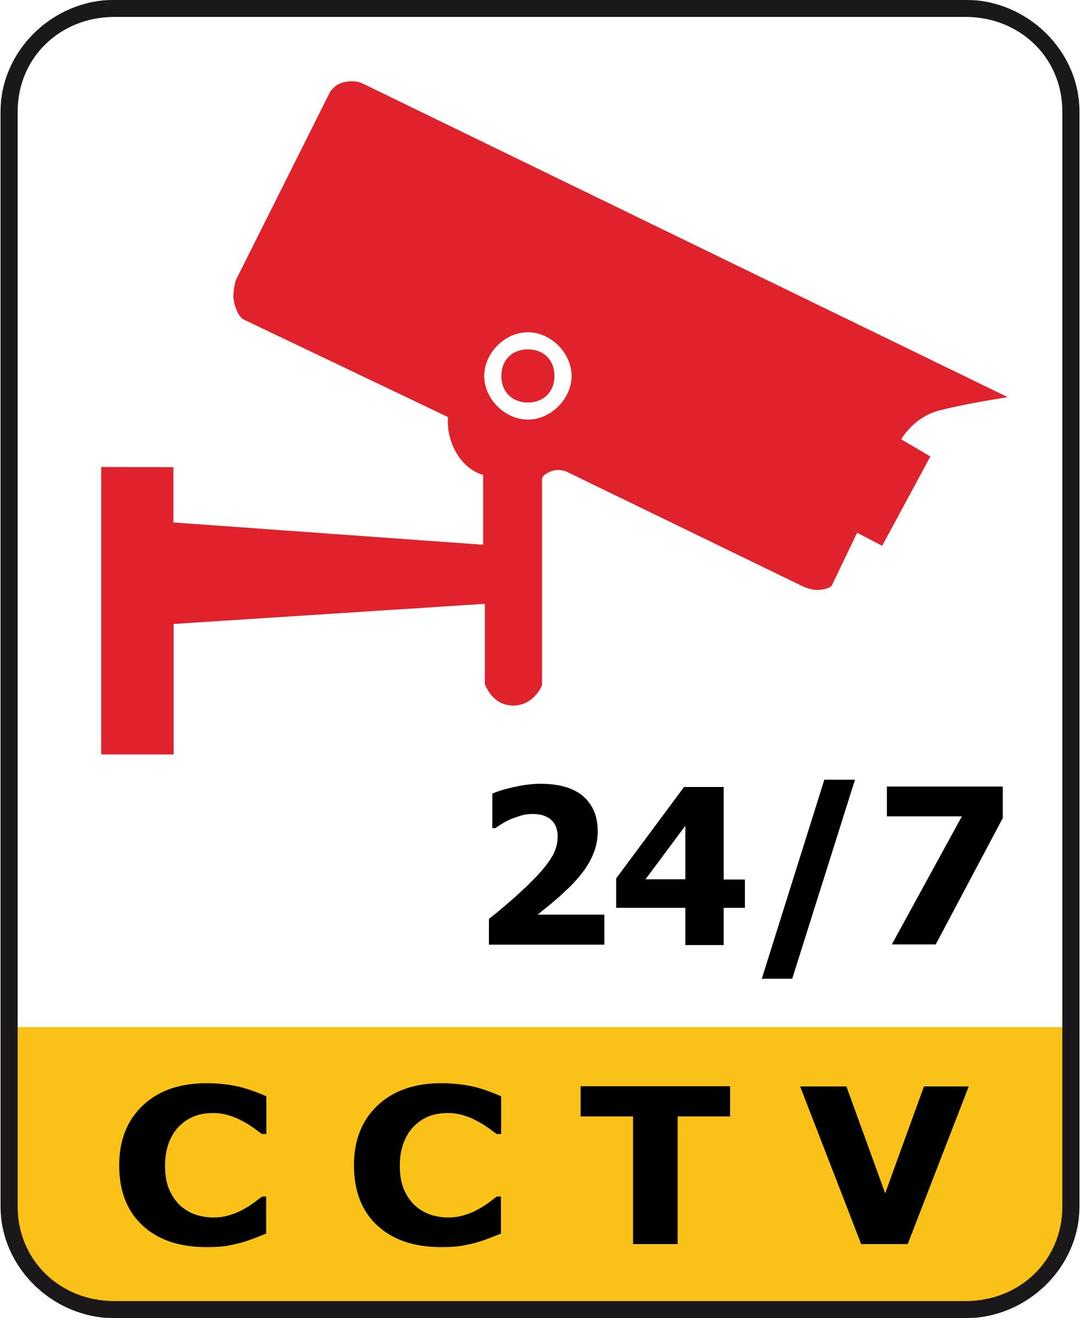 CCTV 24/7 Camera Surveillance png transparent